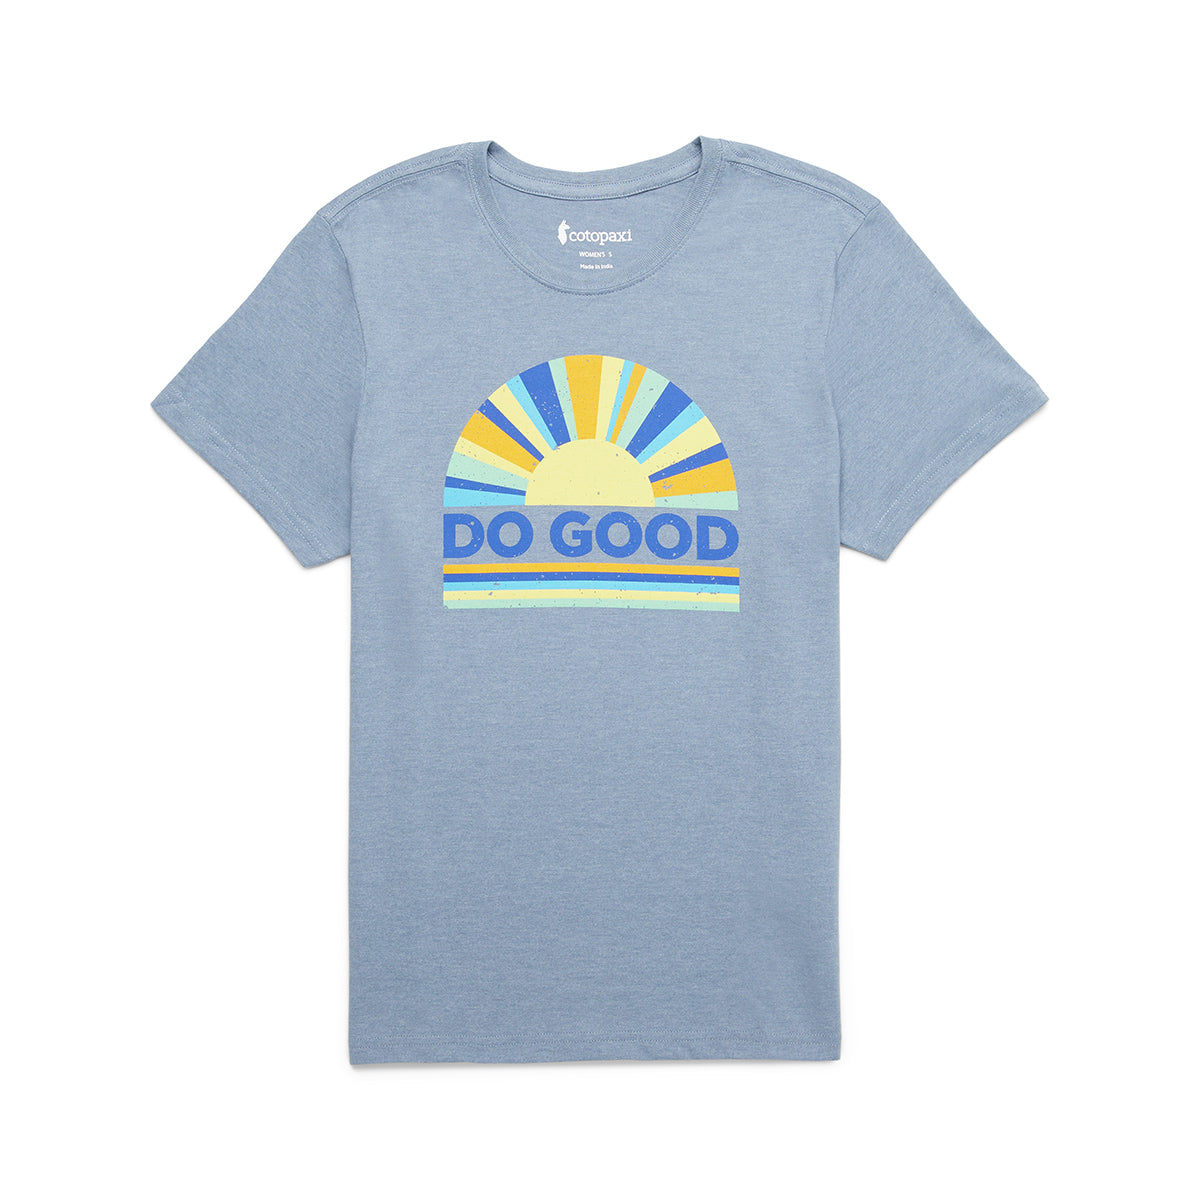 Cotopaxi Sunrise T-Shirt - WOMENS サンライズ ティーシャツ レディース